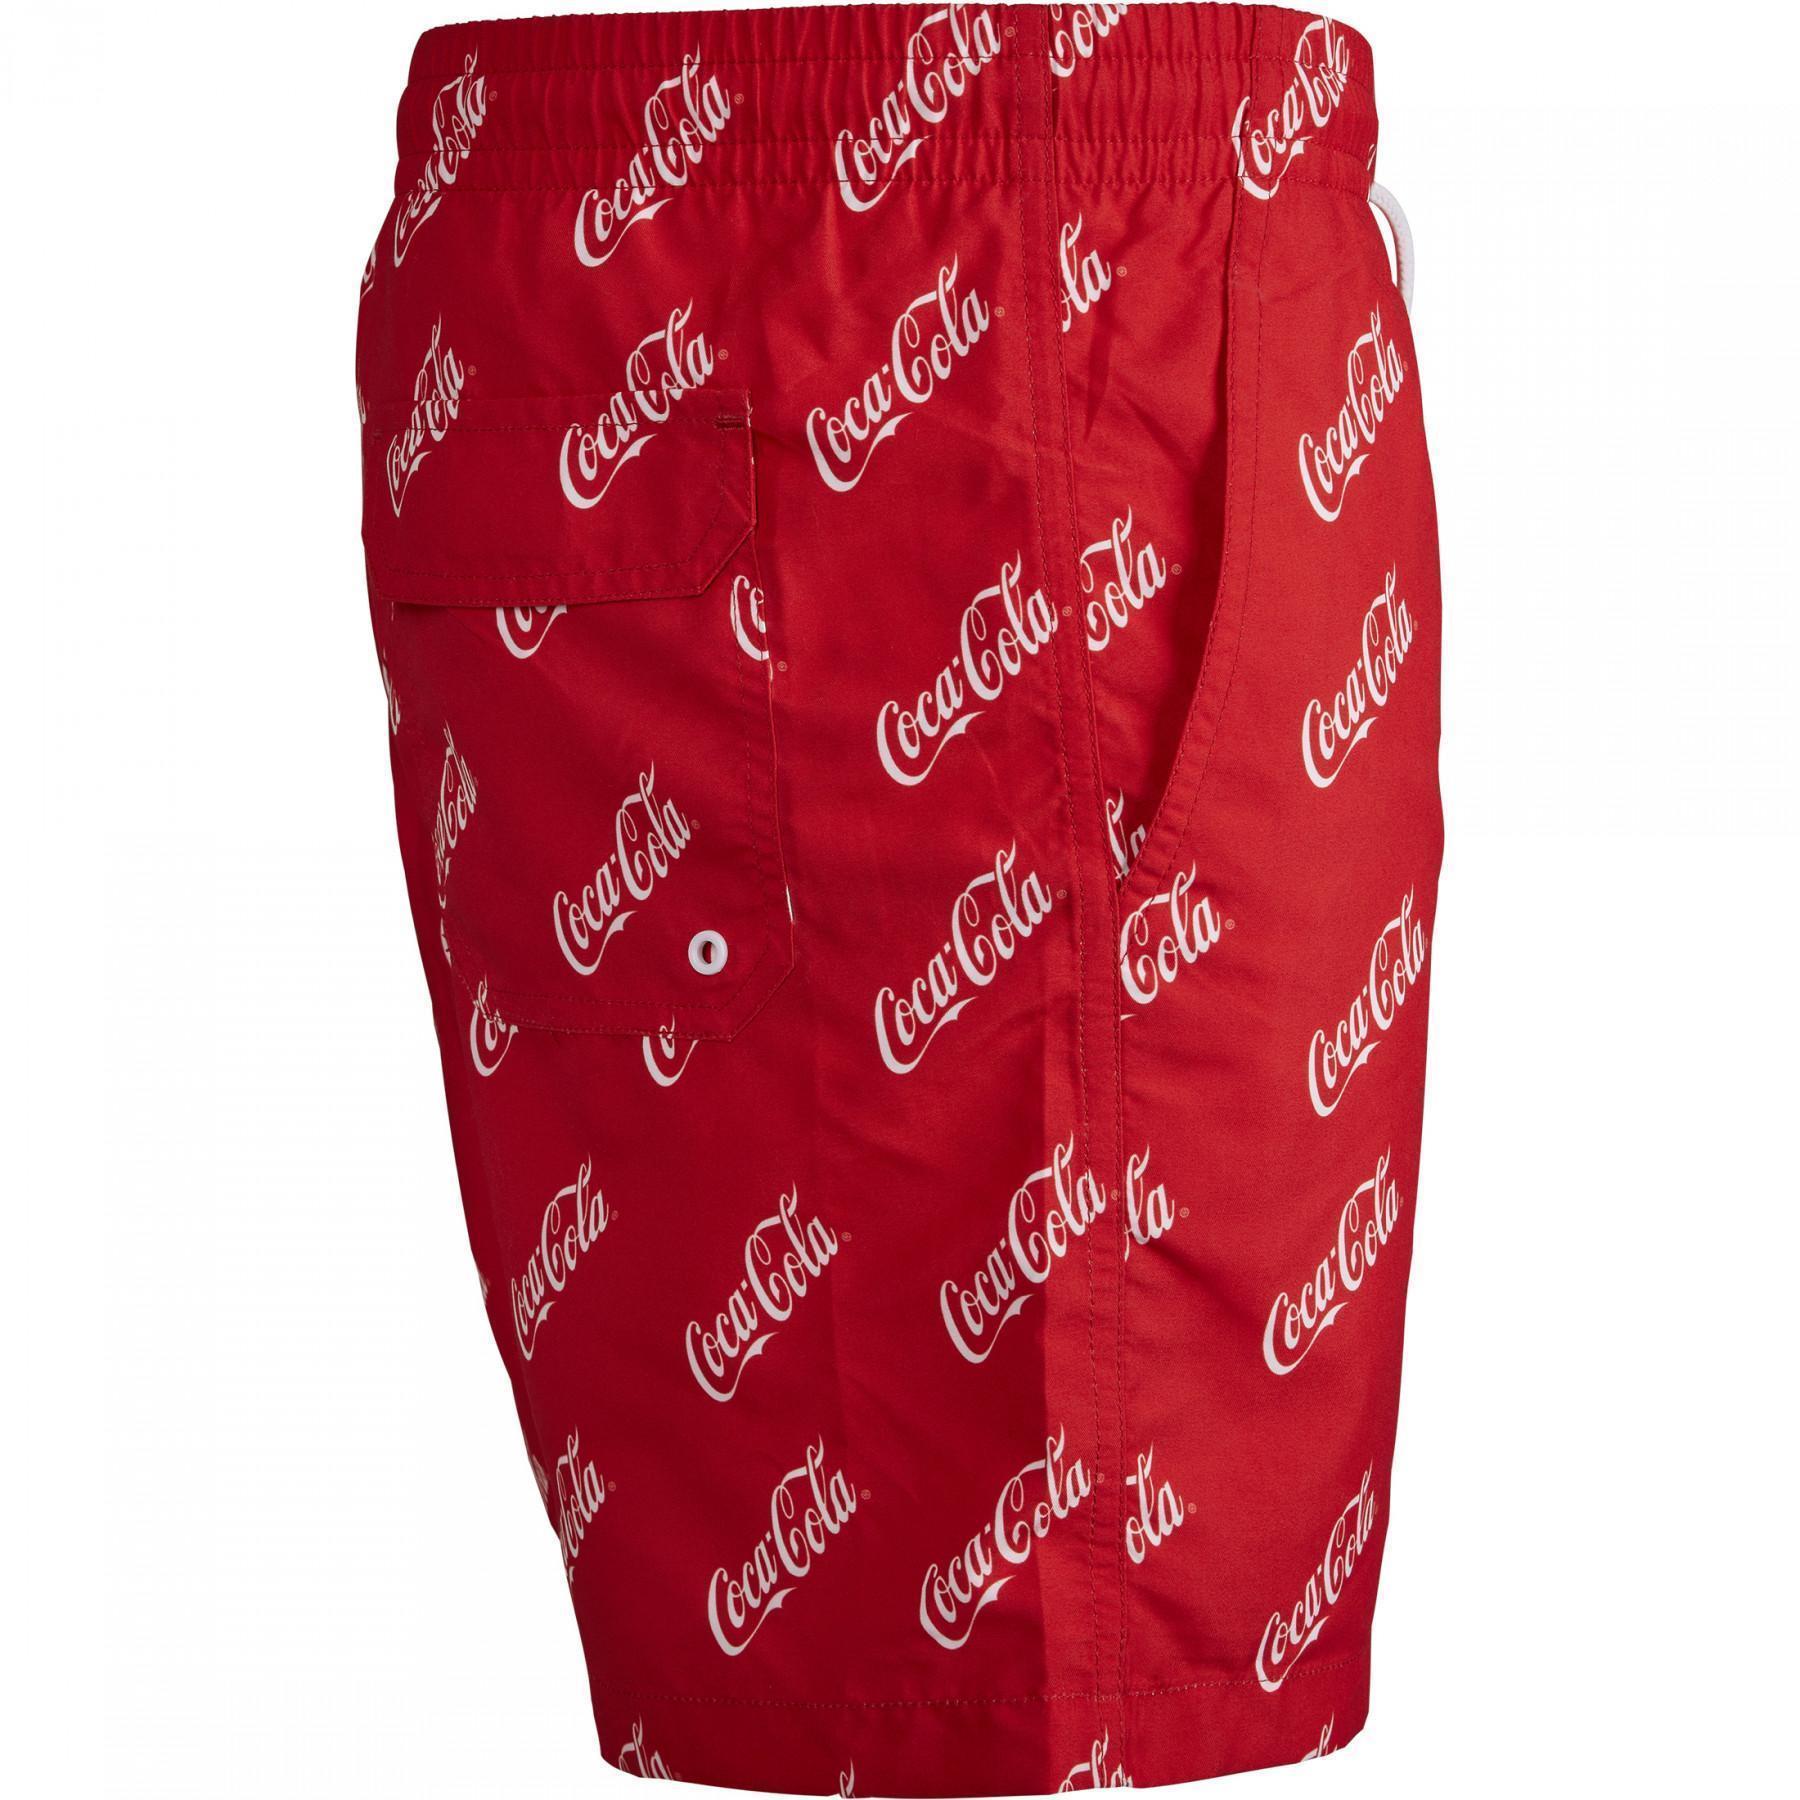 Stedelijke Klassieke coca cola Short